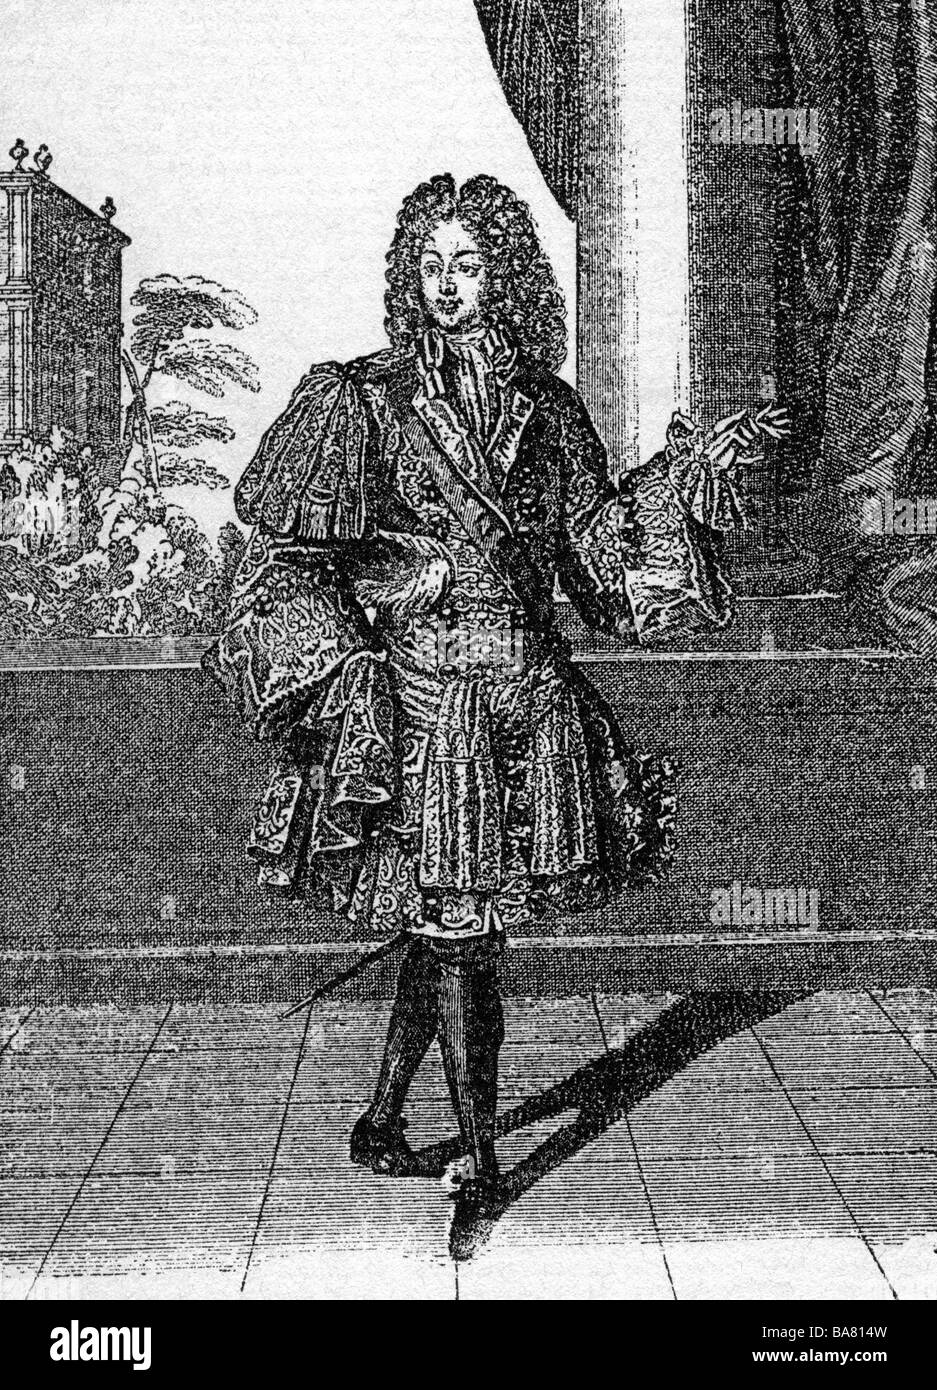 17th century men's fashion